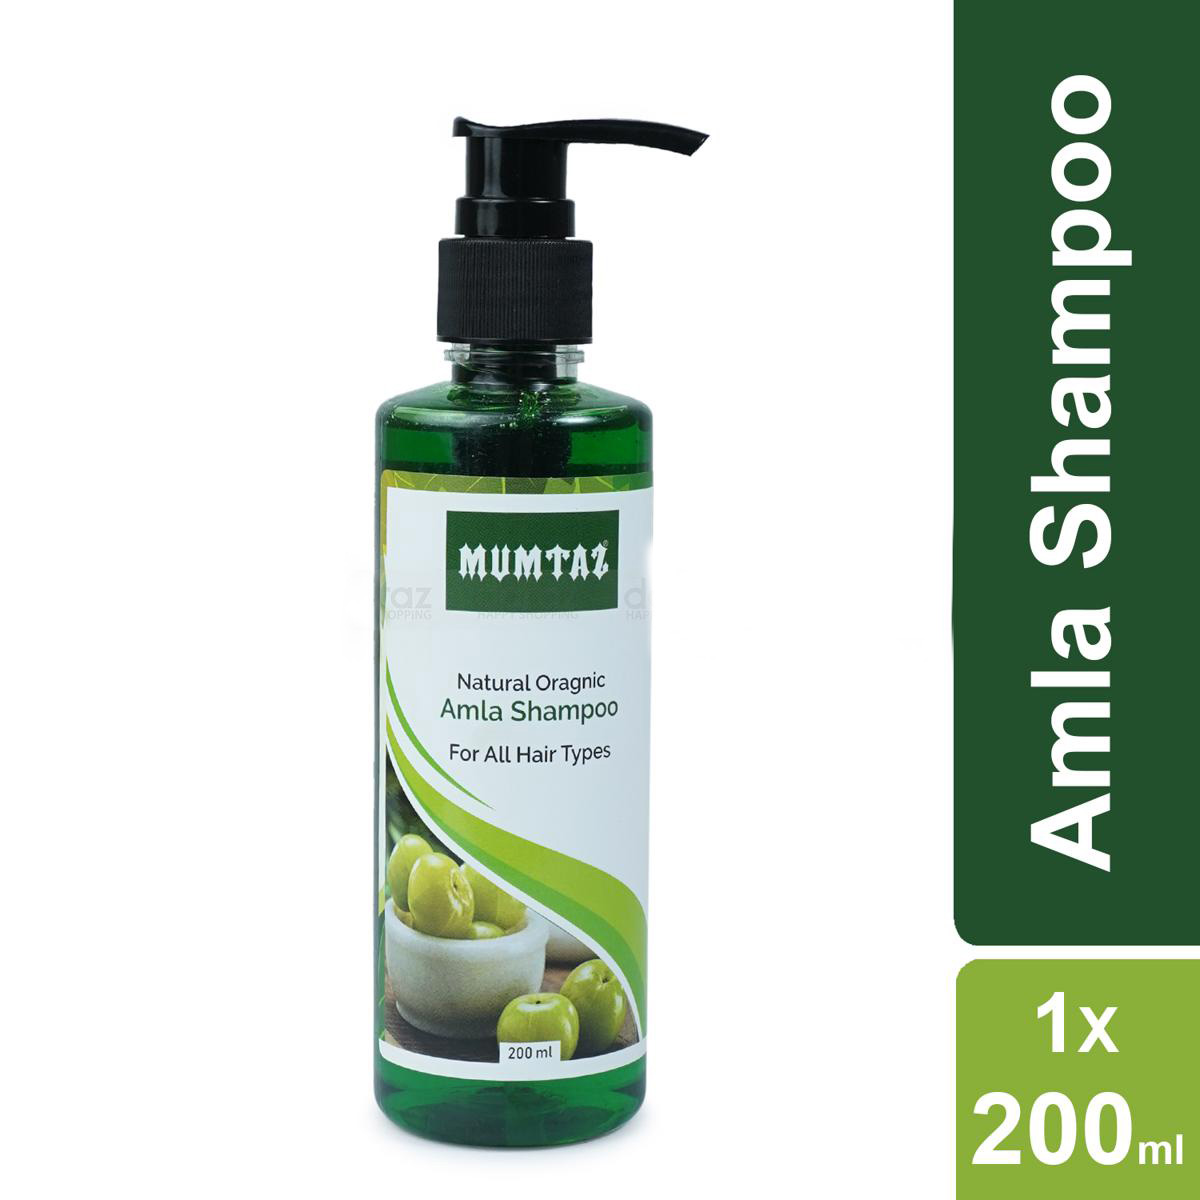 MUMTAZ Natural Organic Amla Shampoo 200 ml